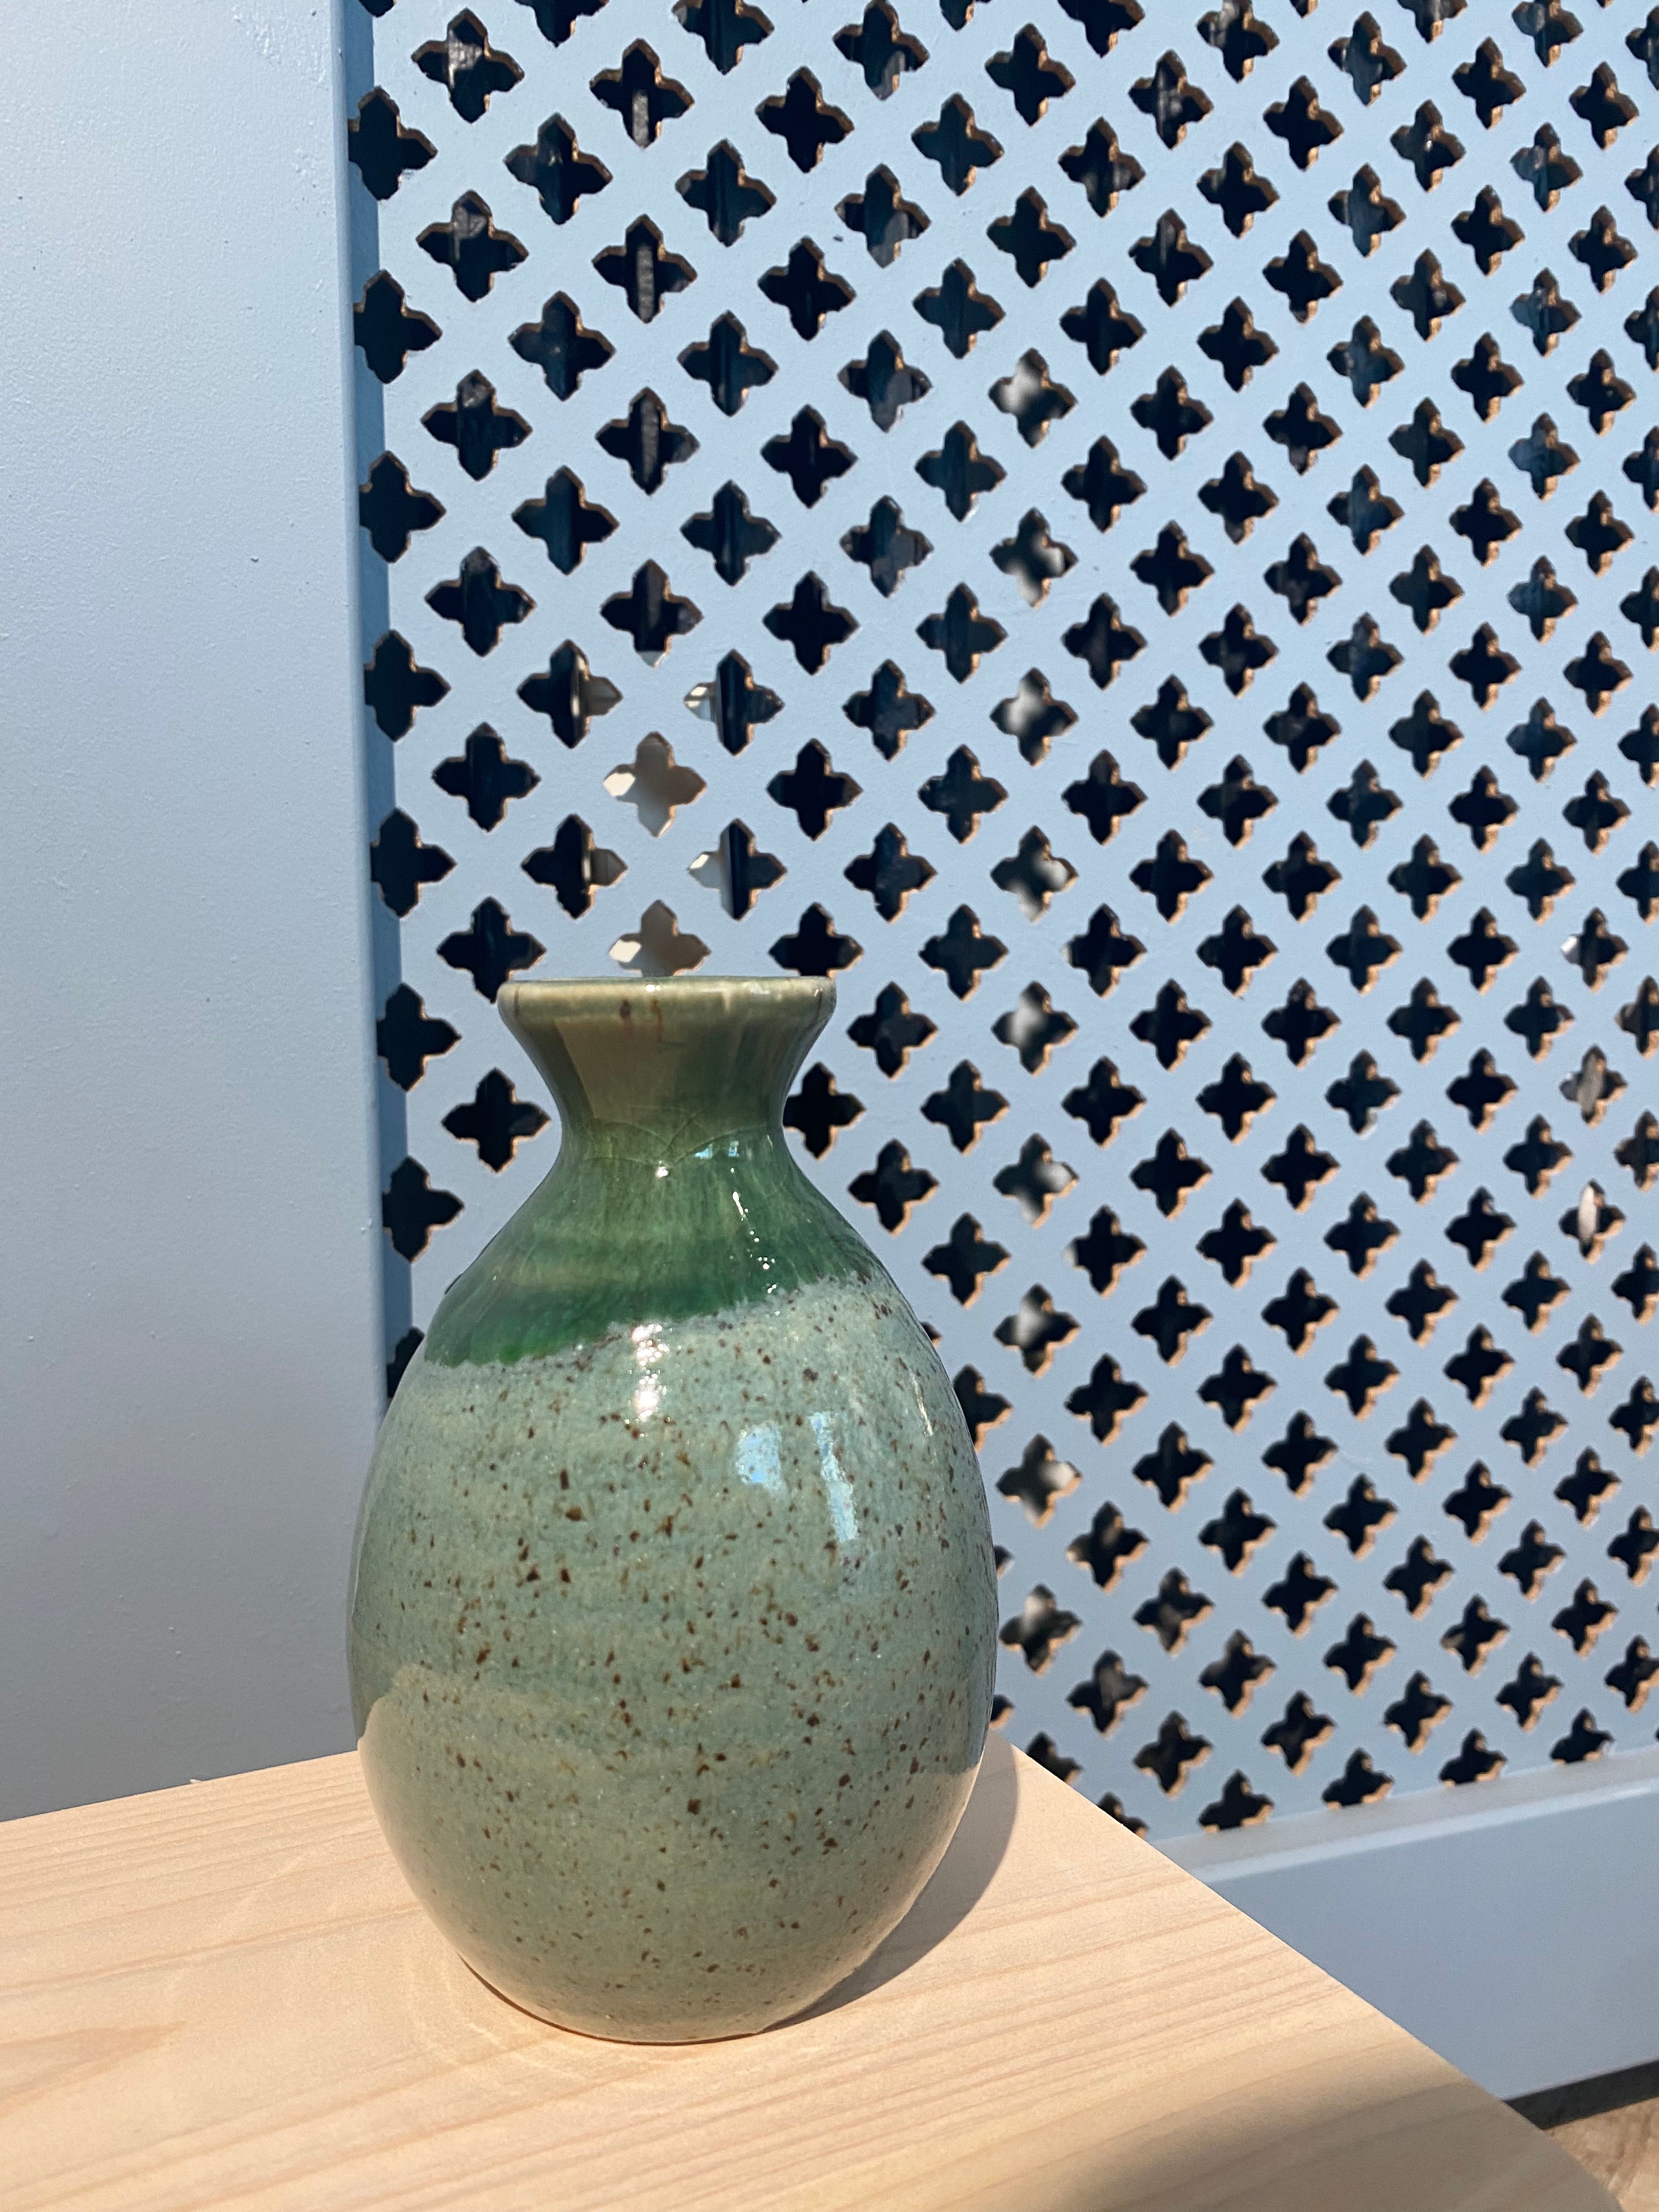 Sake jug with green glaze and brown dots